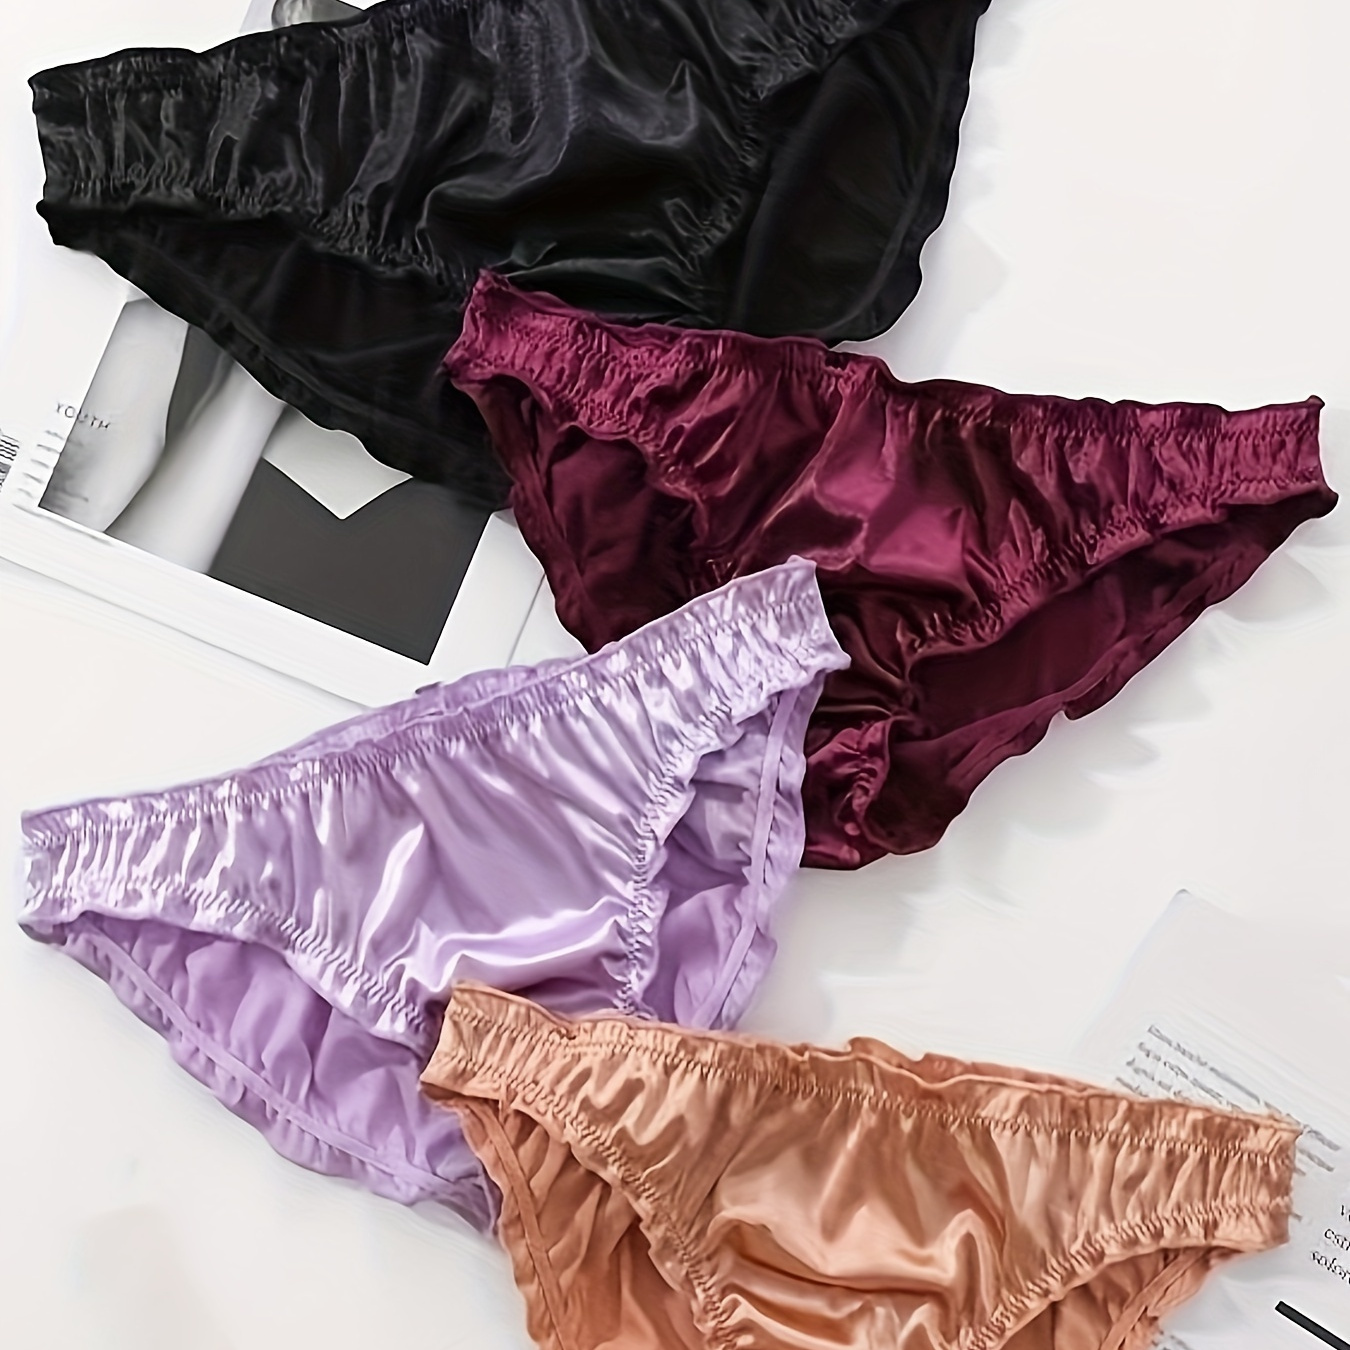 

4pcs Ruched Satin Briefs, Comfy & Breathable Intimates Panties, Women's Lingerie & Underwear